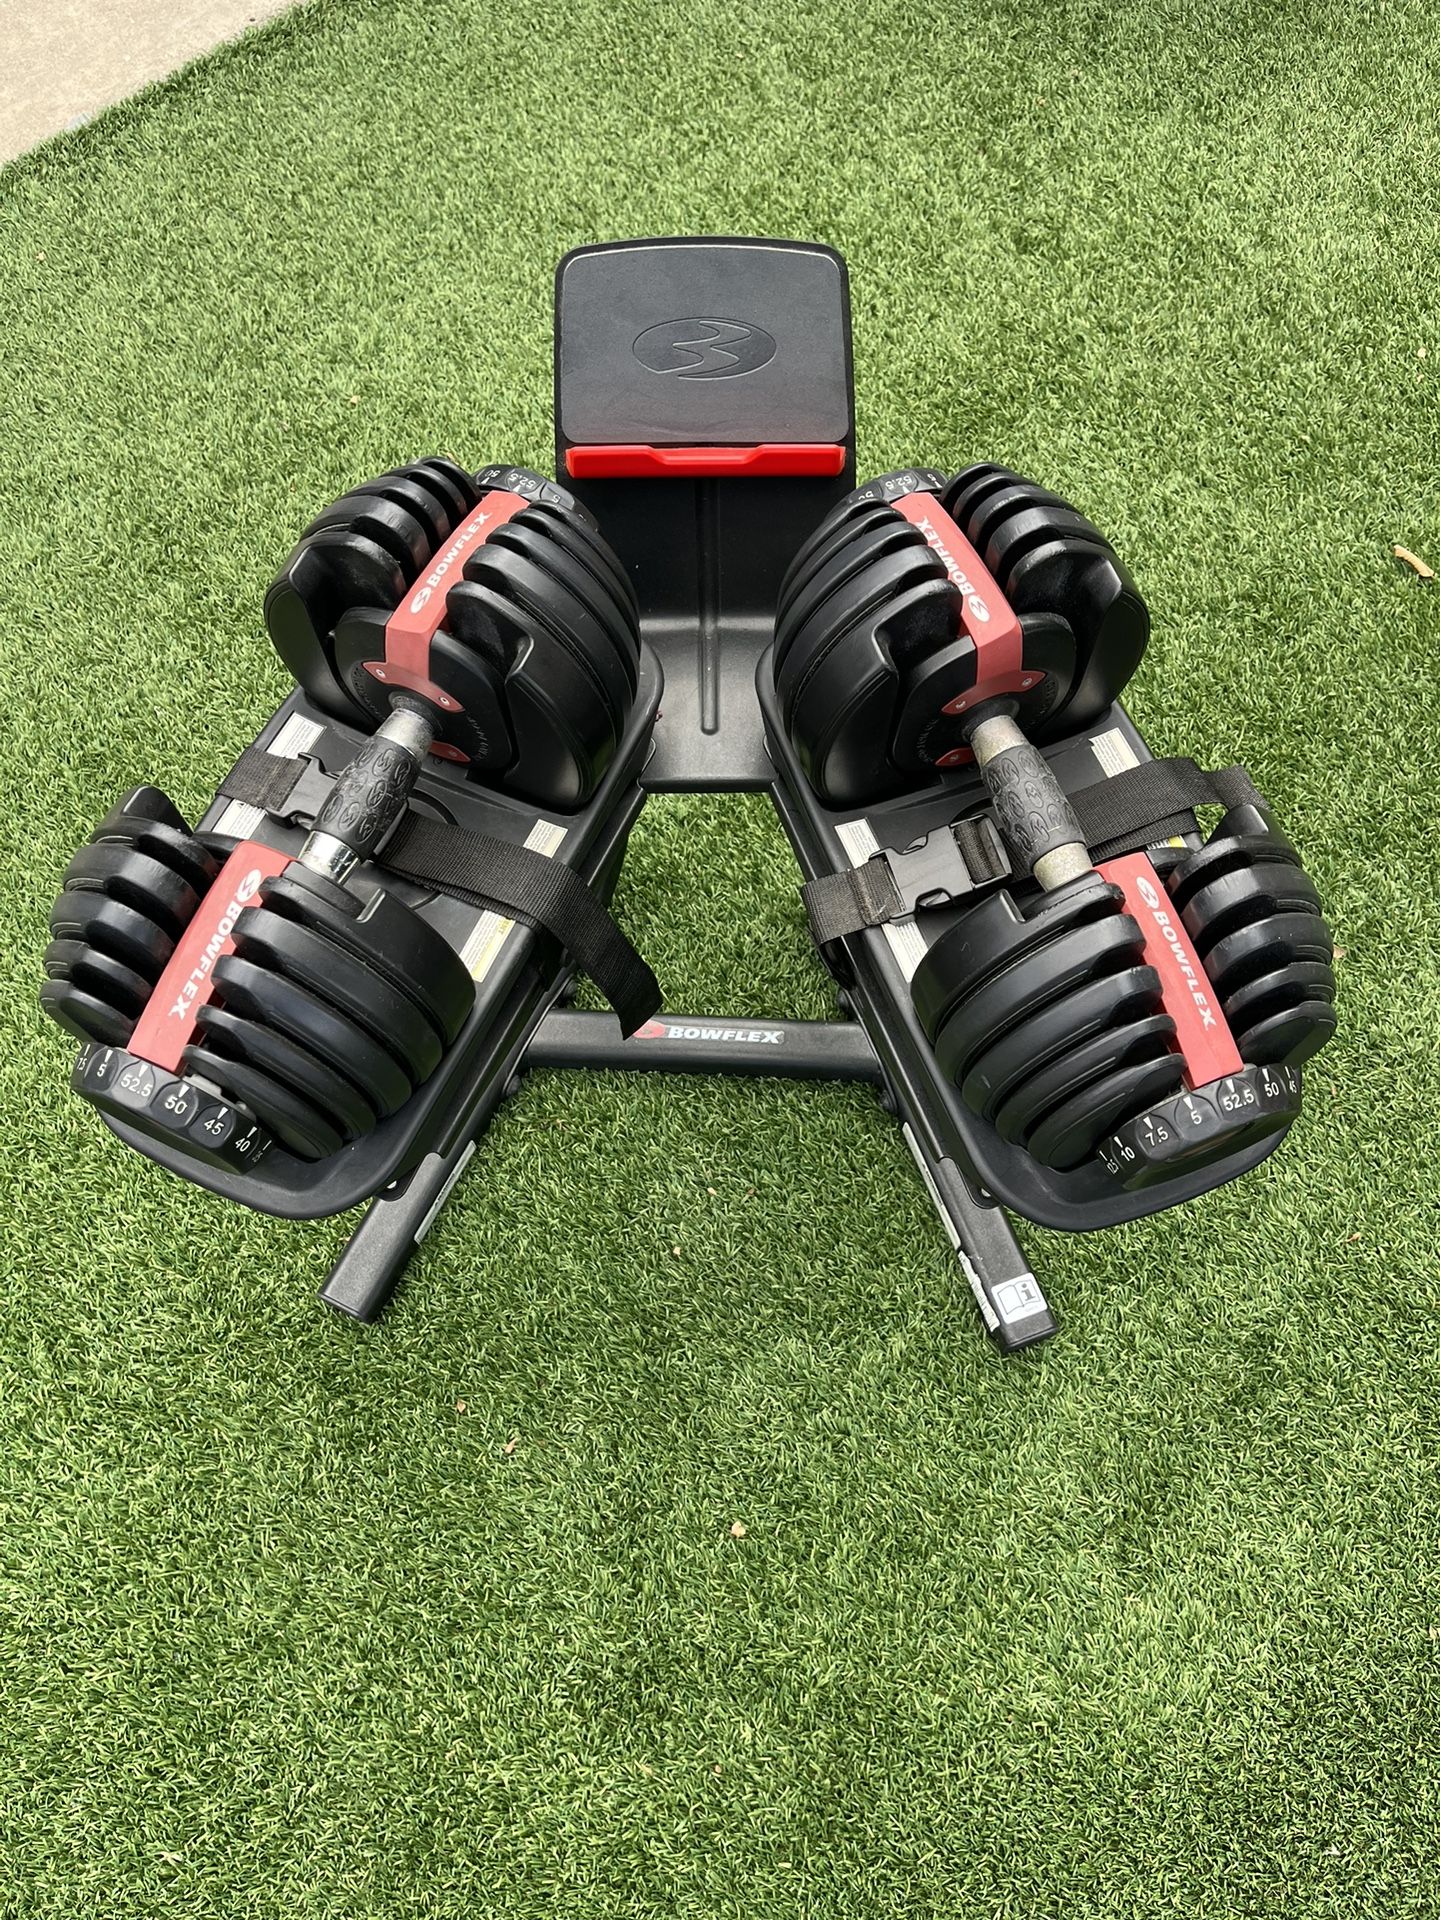 Bowflex 552 Adjustable Dumbbells Set With Stand